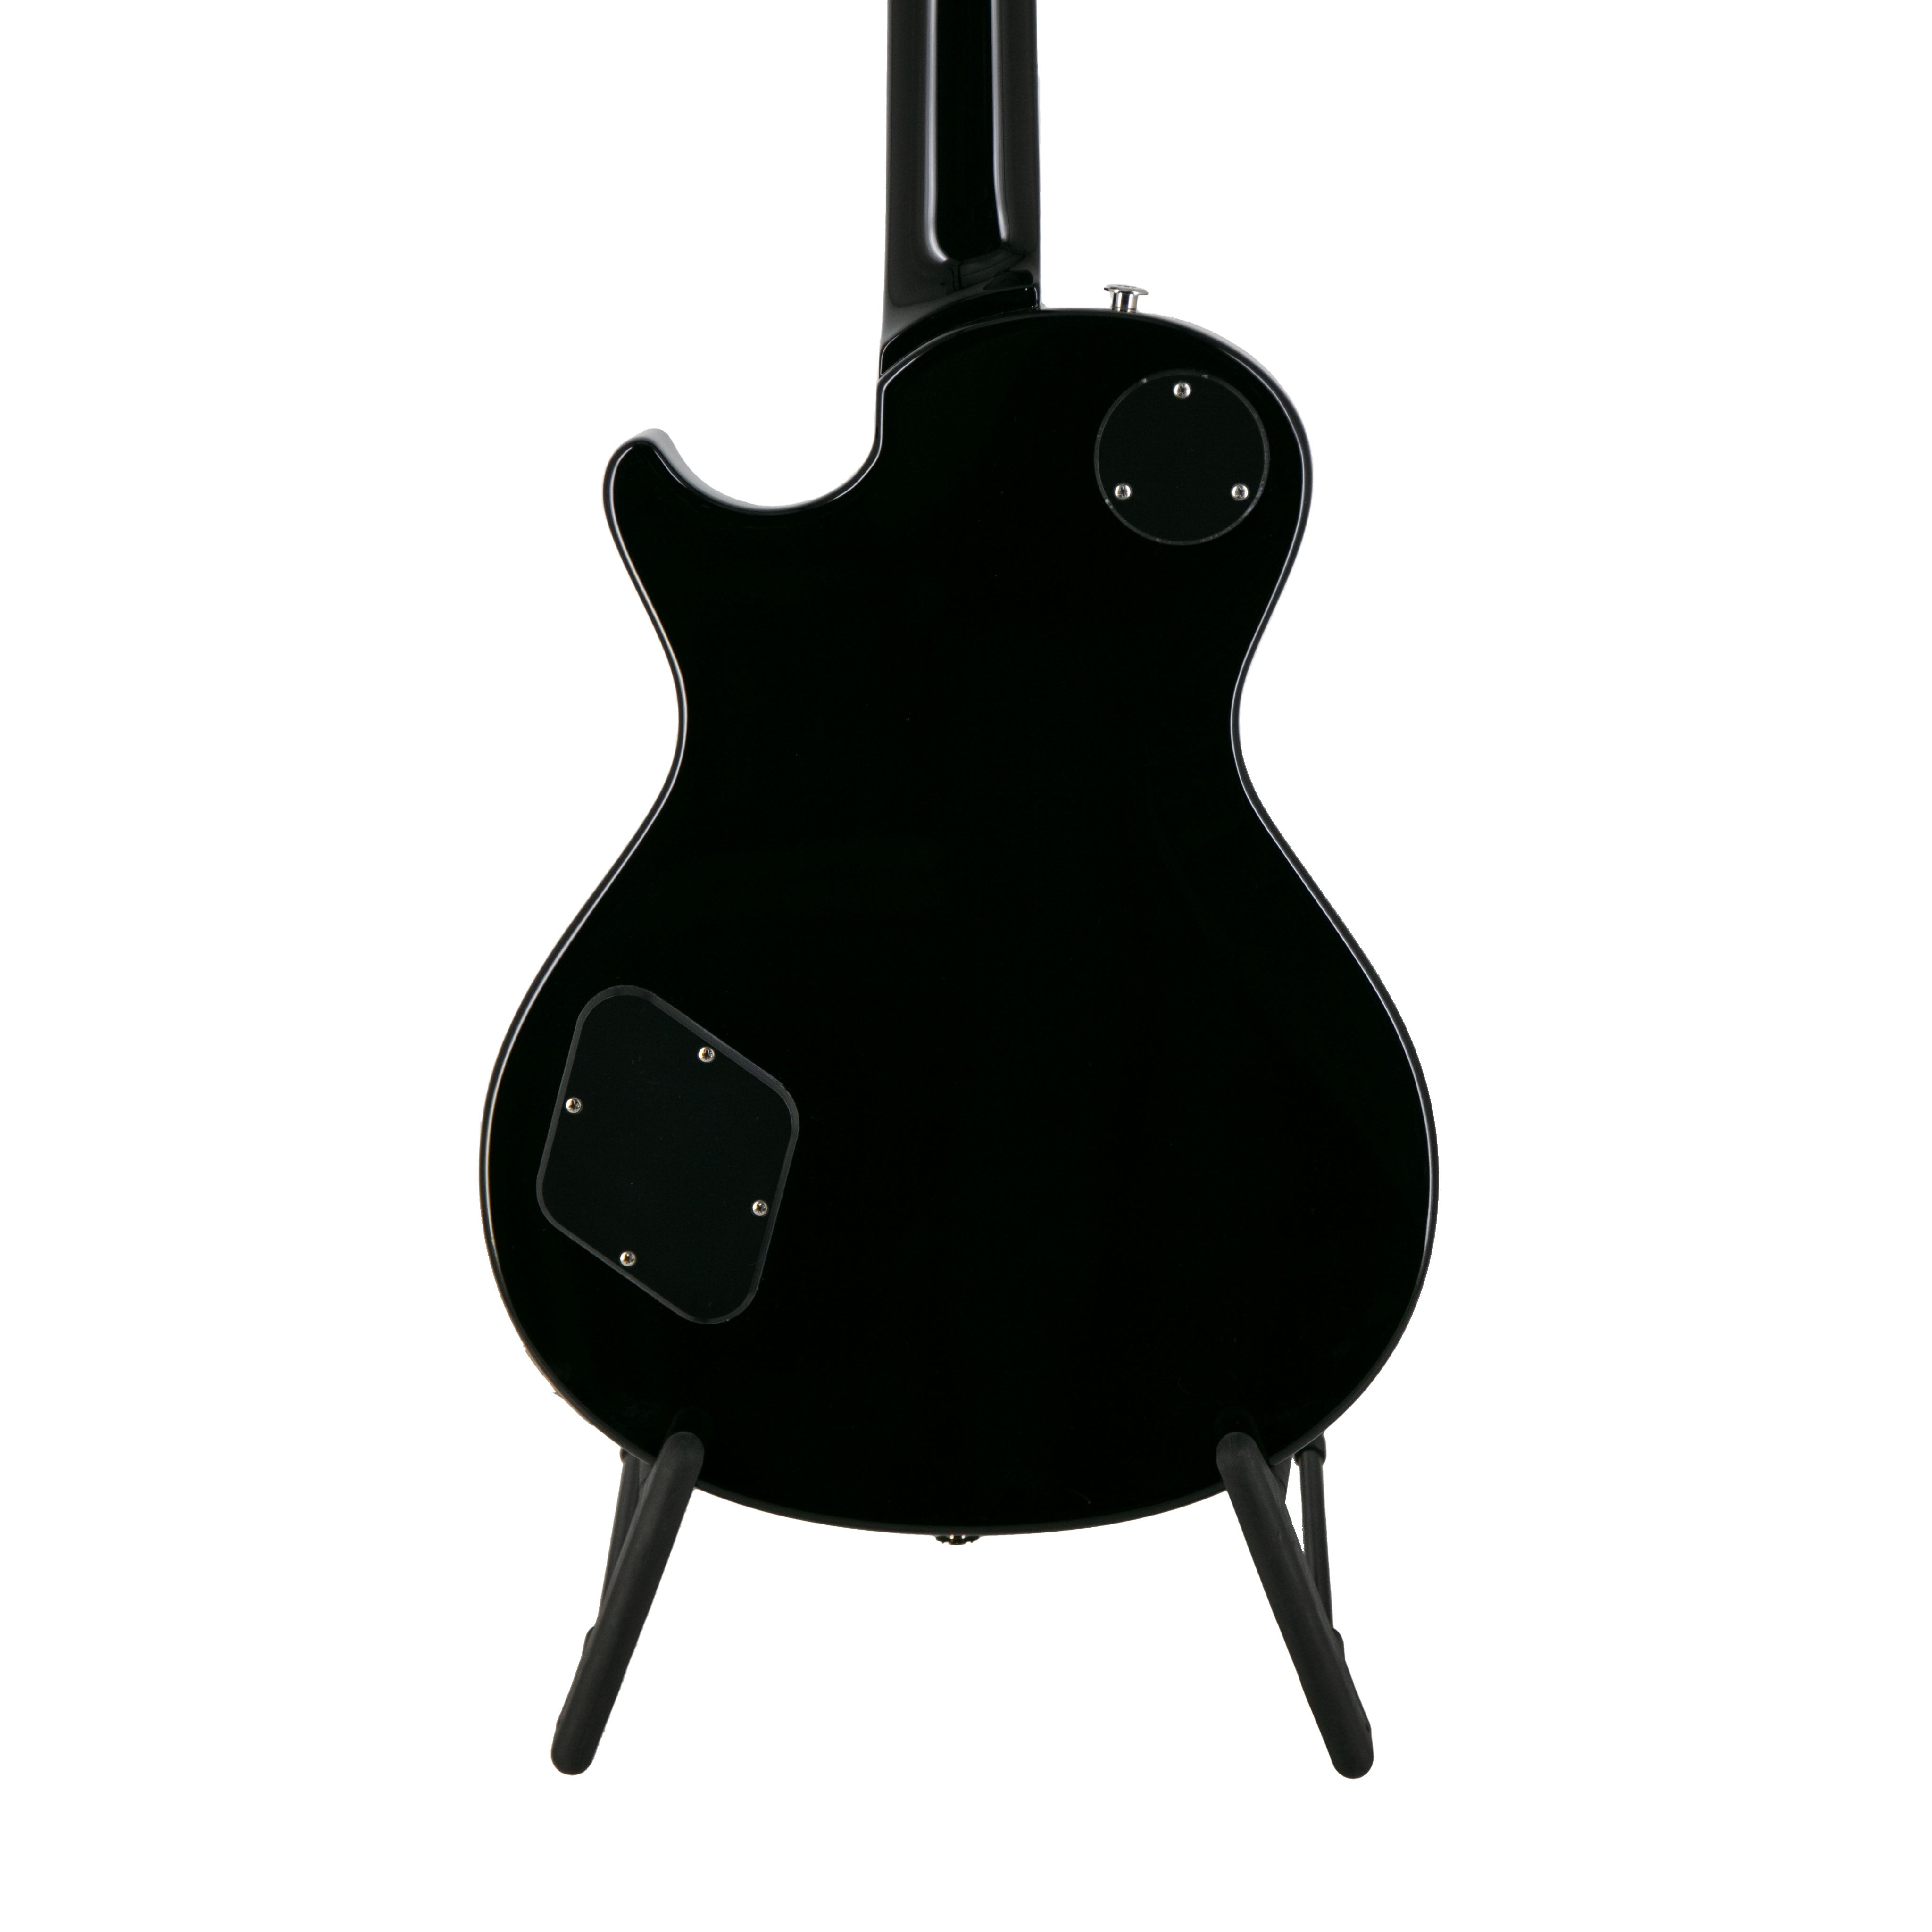 PRS S2 Singlecut McCarty 594 Electric Guitar w/Bag, Custom Color, Tri-Sunburst, S2061131 - Zoso Music